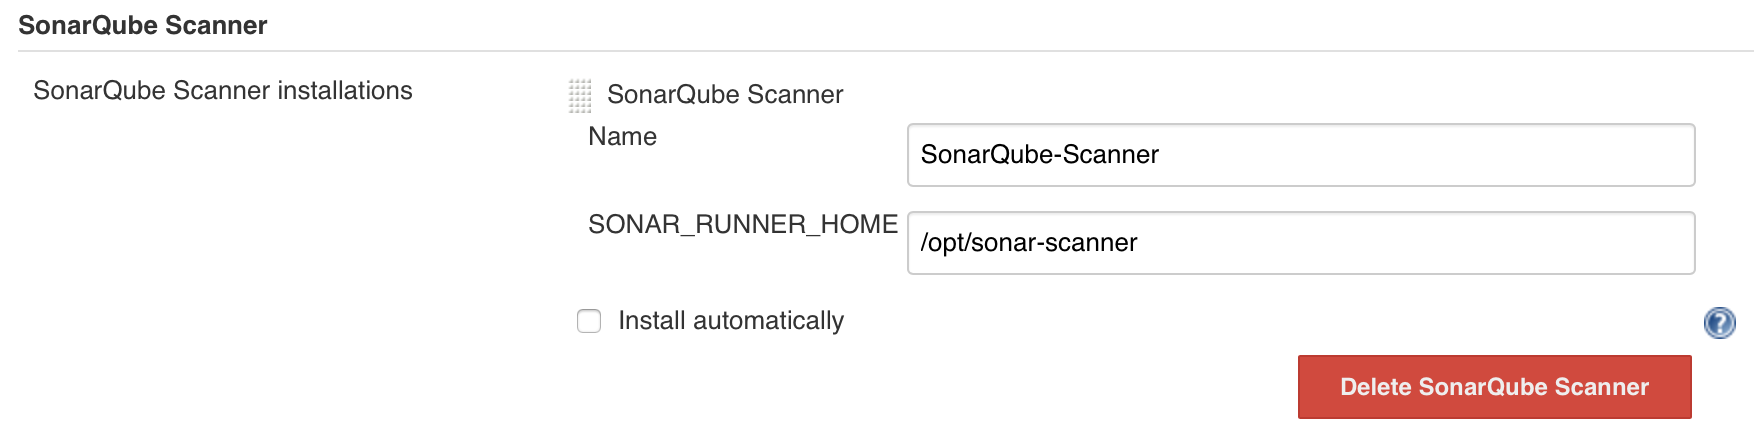 SonarQube Scanner: Global Tool Configuration